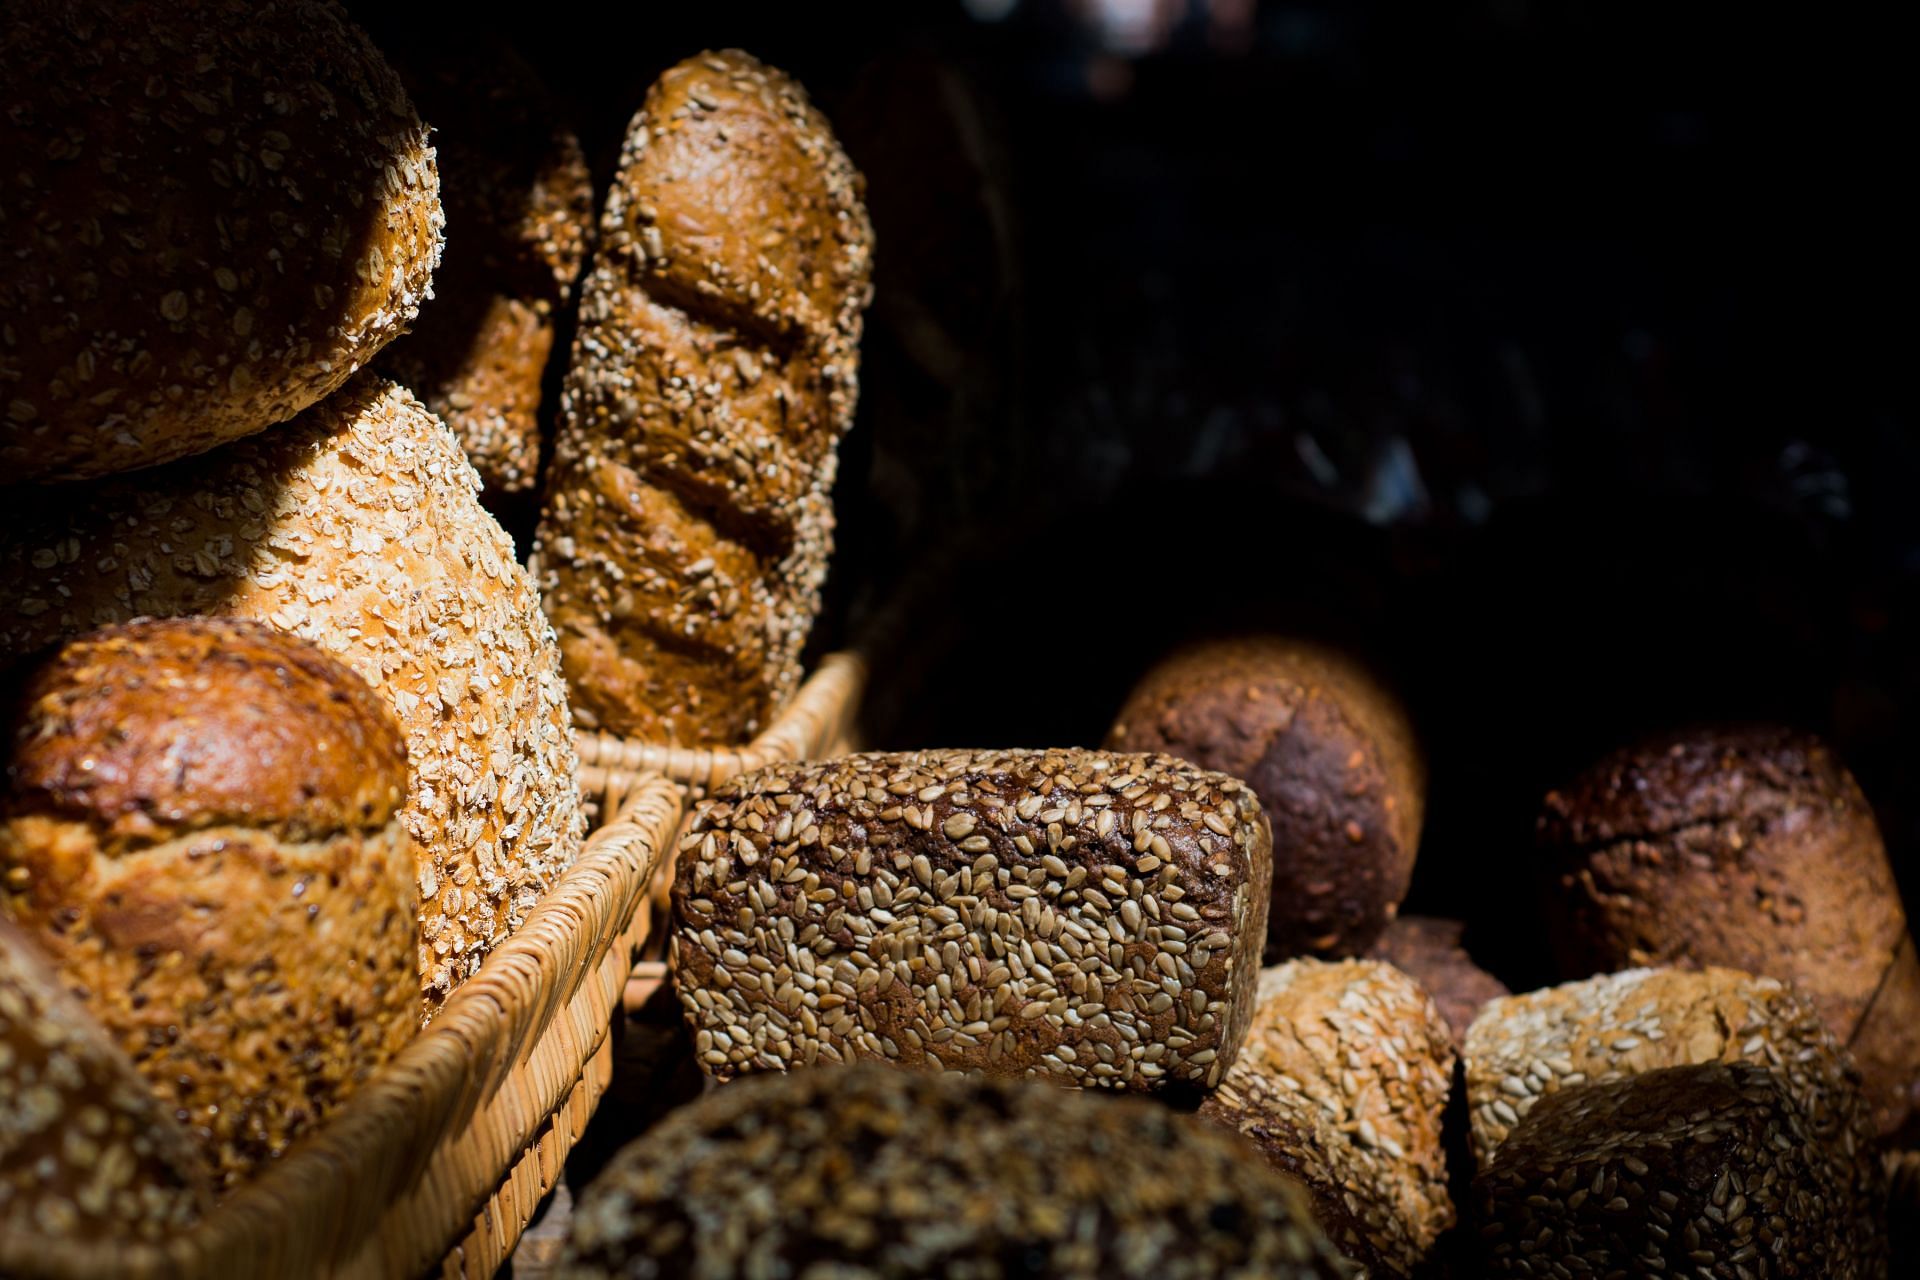 Bread (Image via Unsplash)